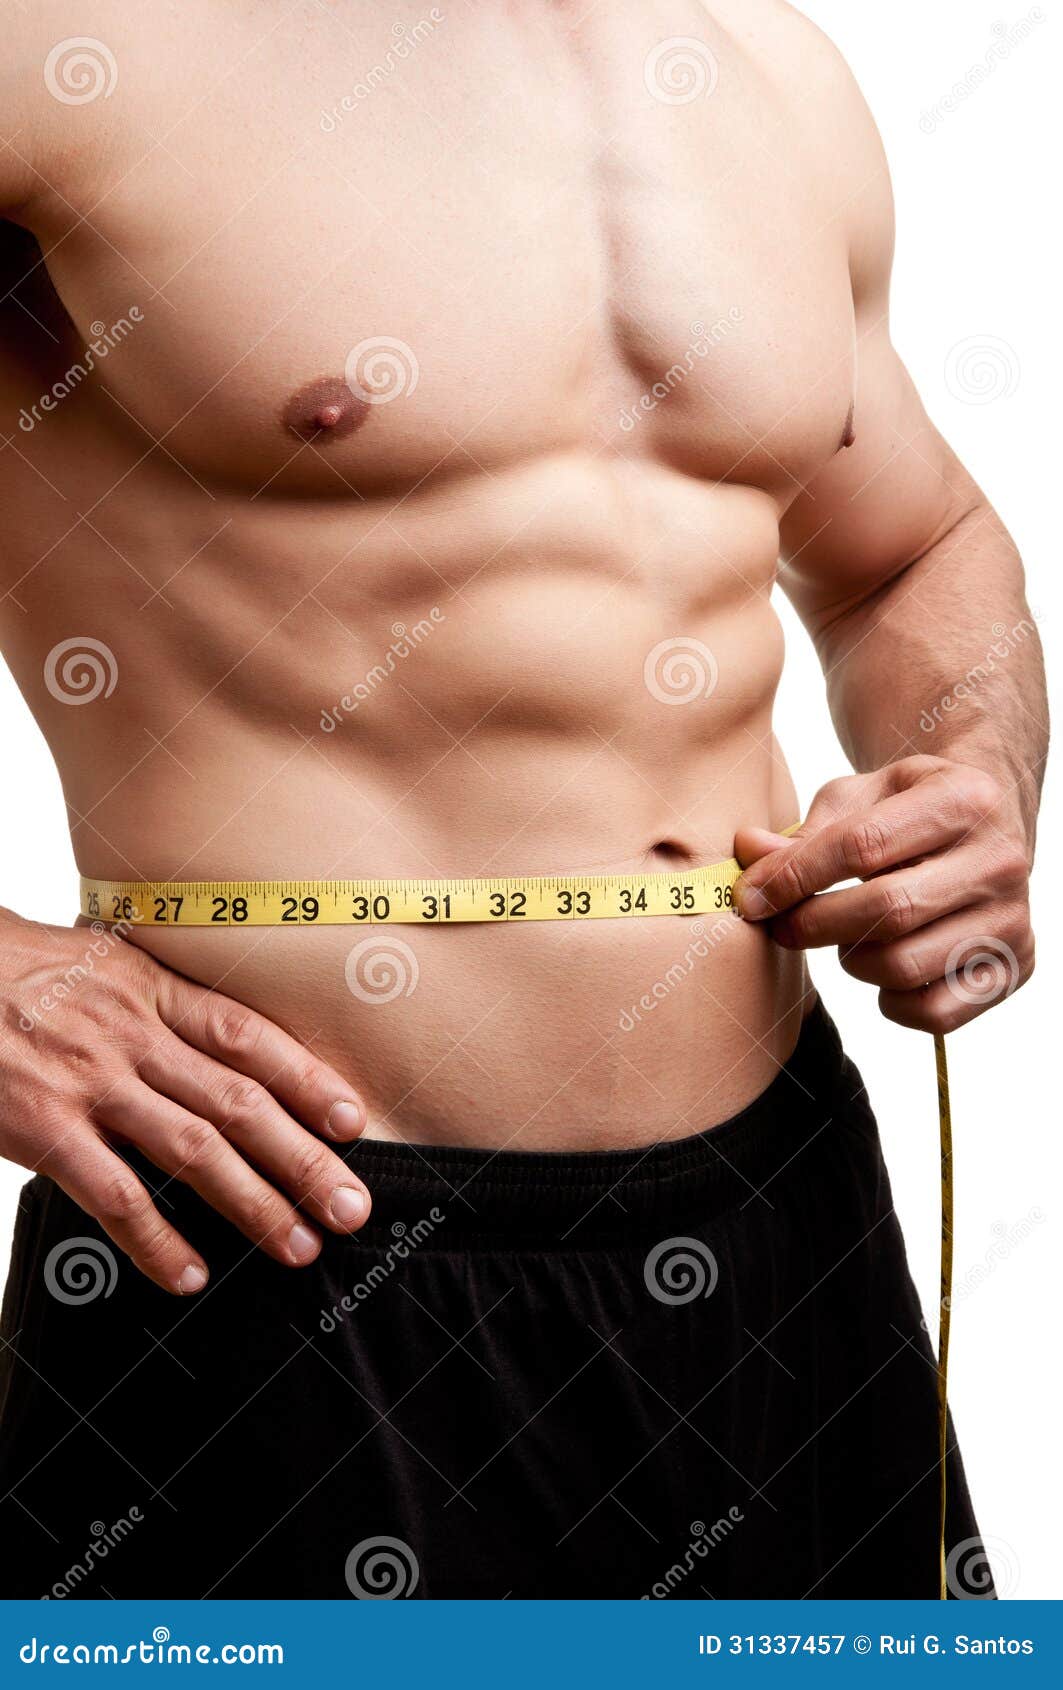 fit man measuring his waist